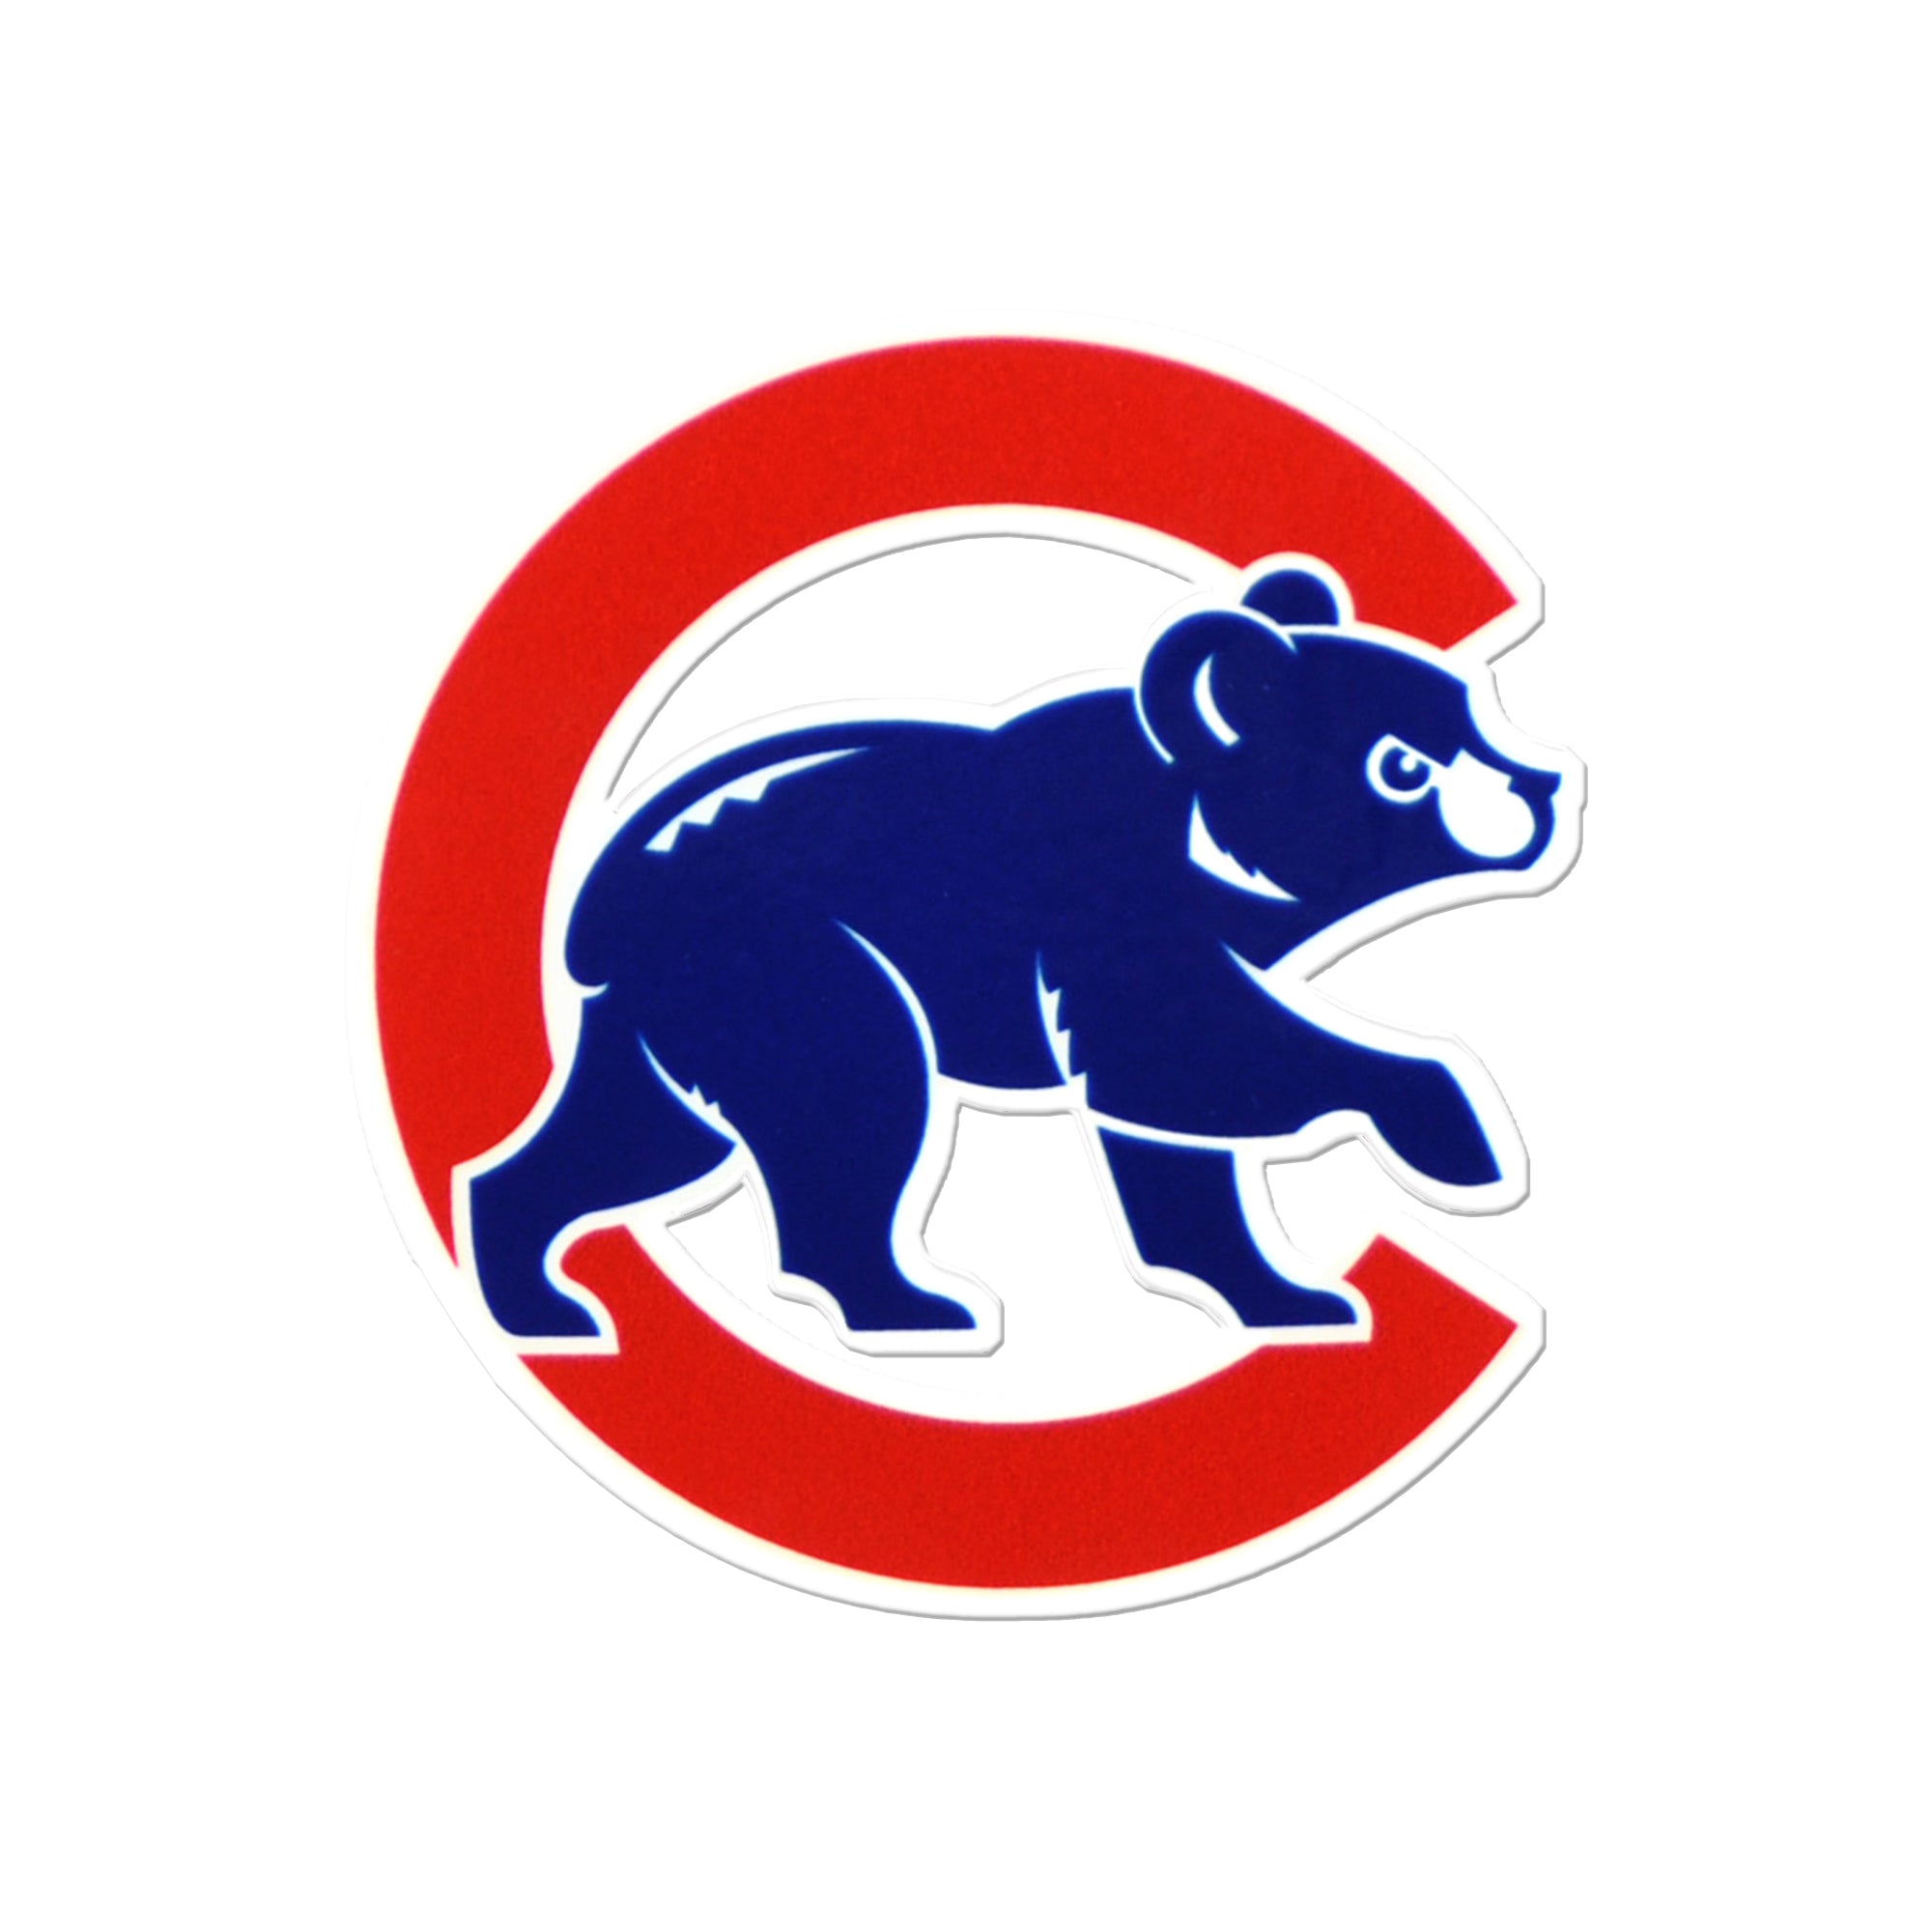 chicago cubs c logo